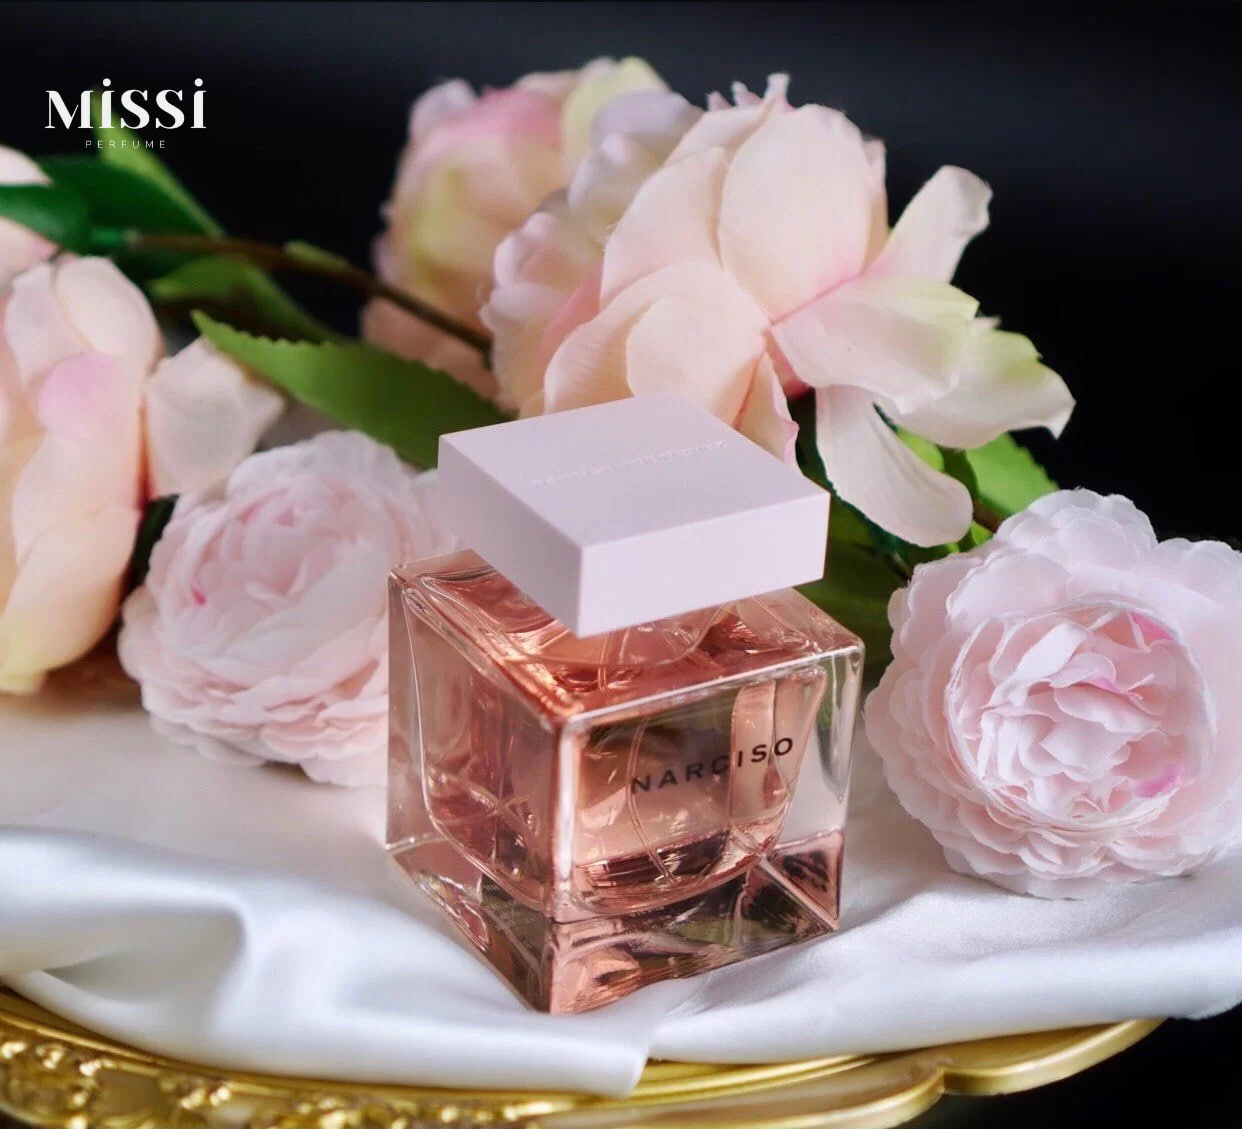 Narciso Rodriguez Cristal EDP - Missi Perfume